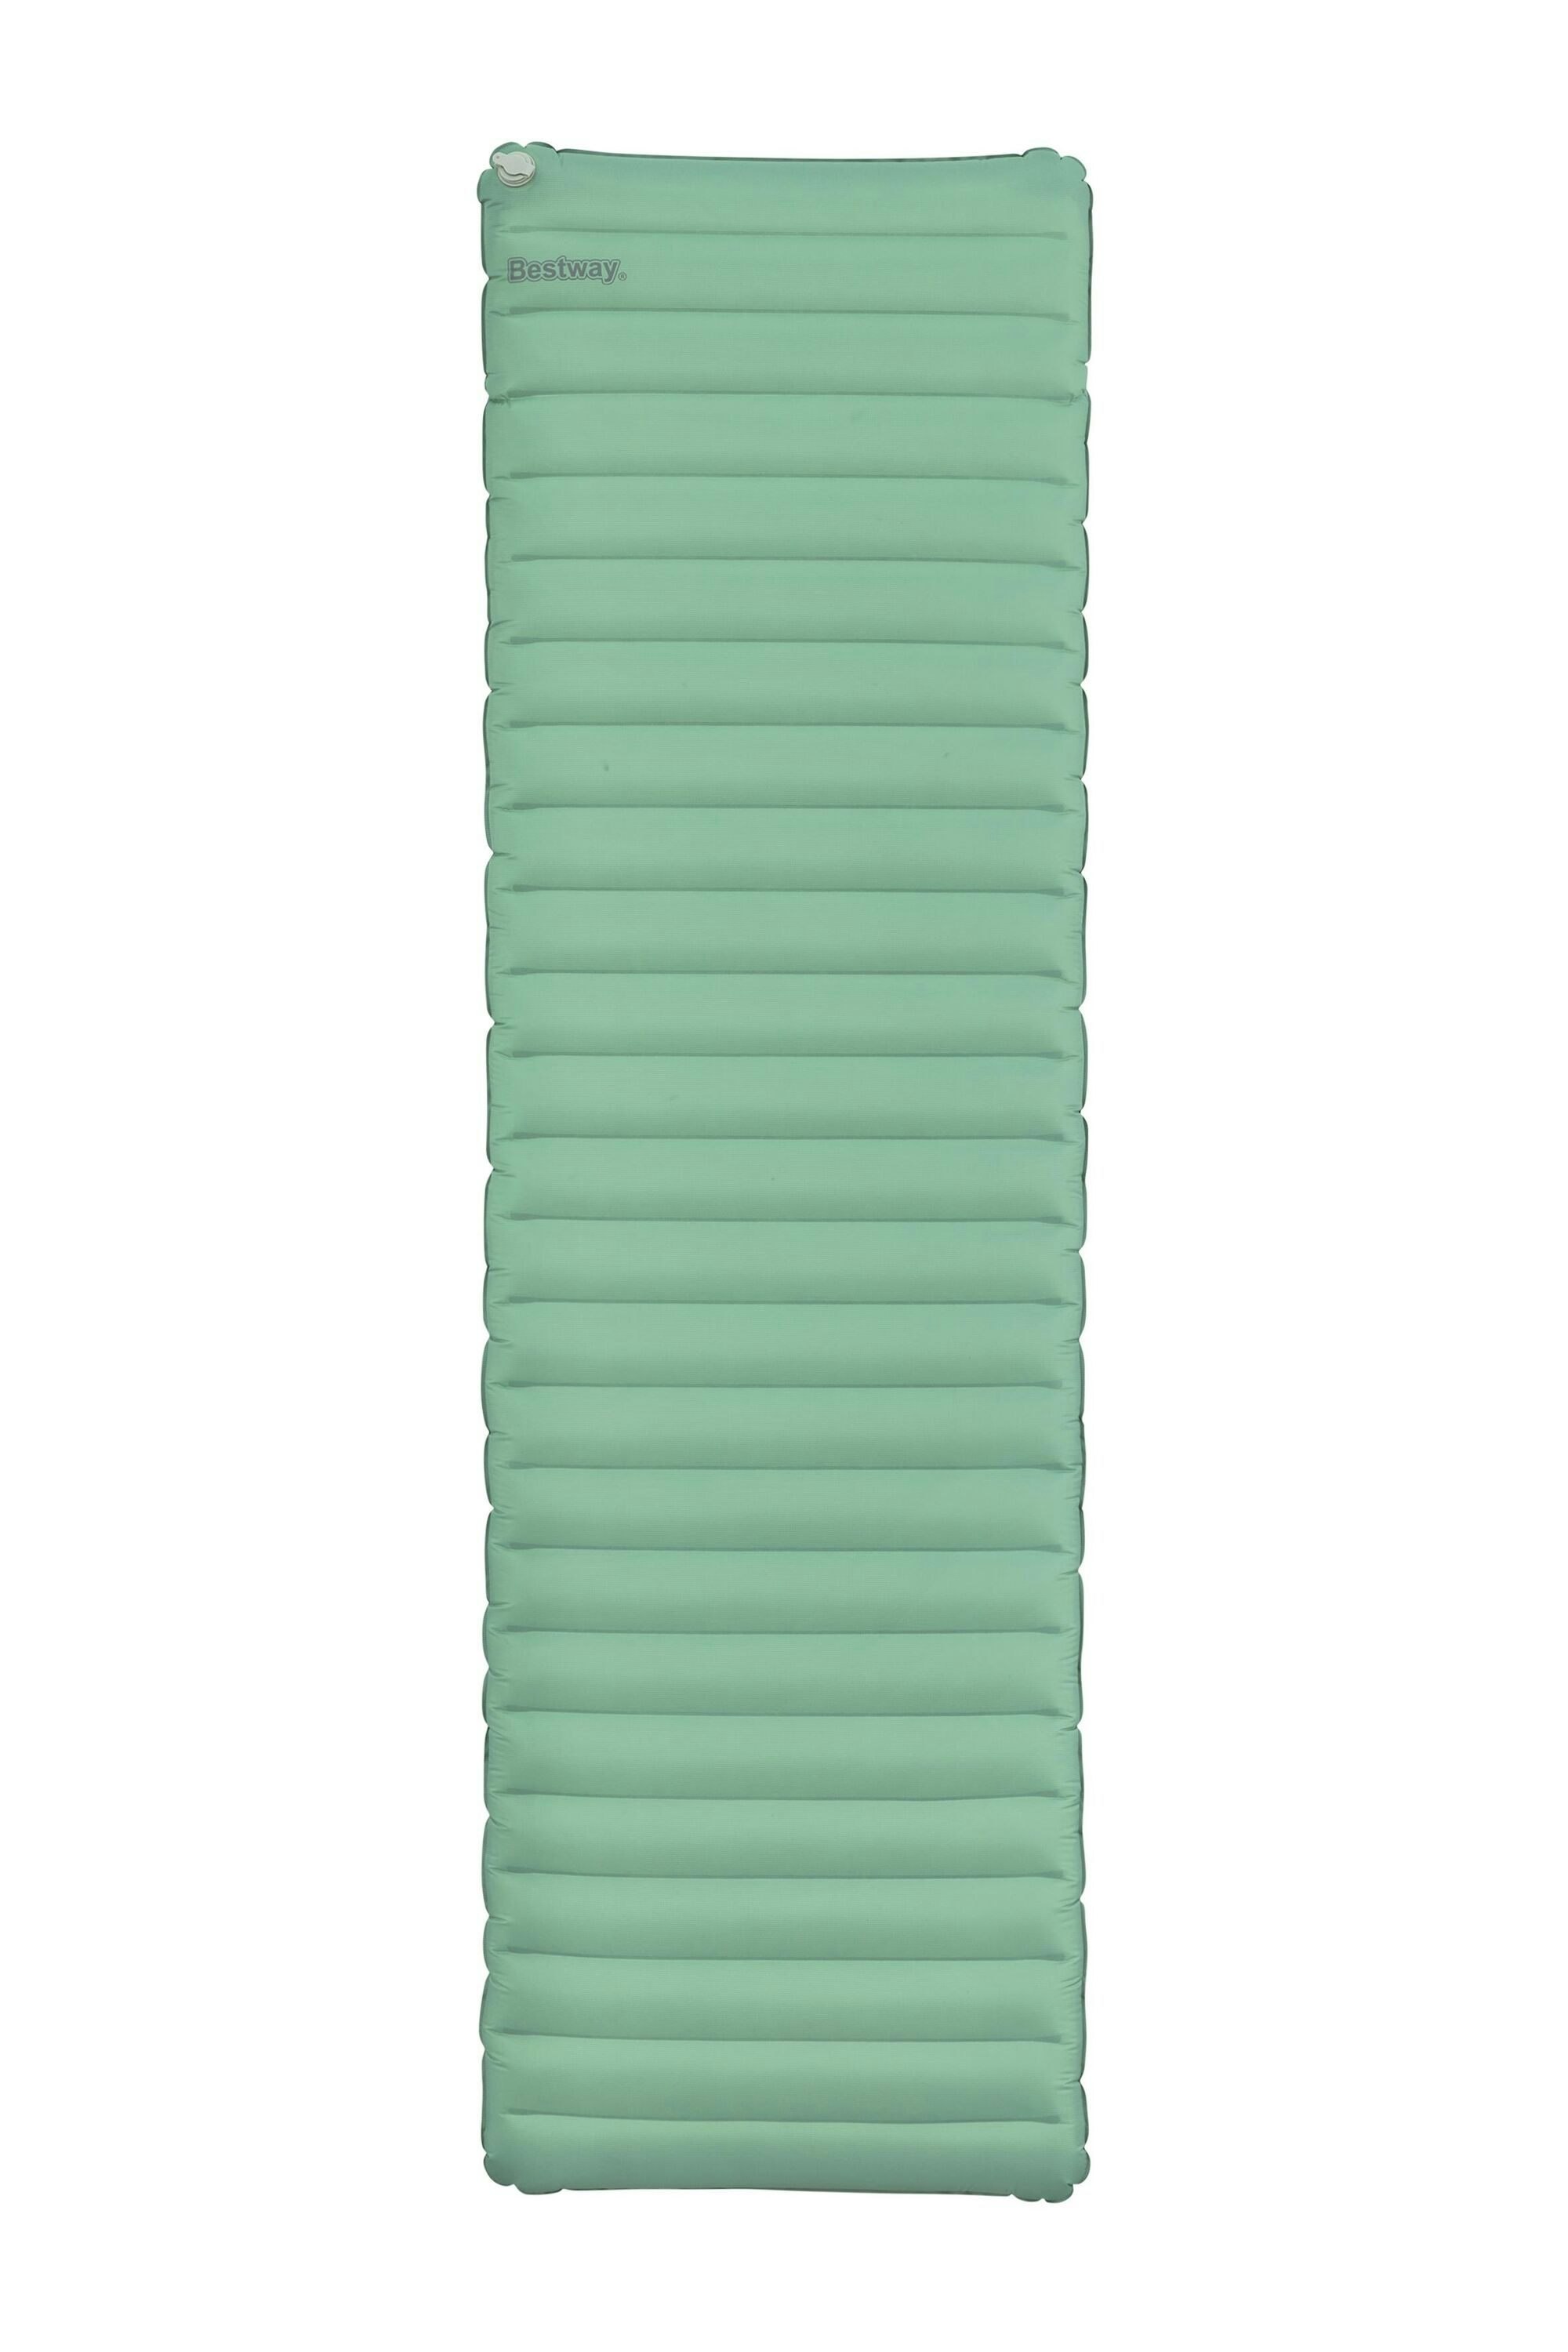 Materassi gonfiabili Materassino singolo da campeggio AdventuRest da 188x58,5x7,5 cm Bestway 1